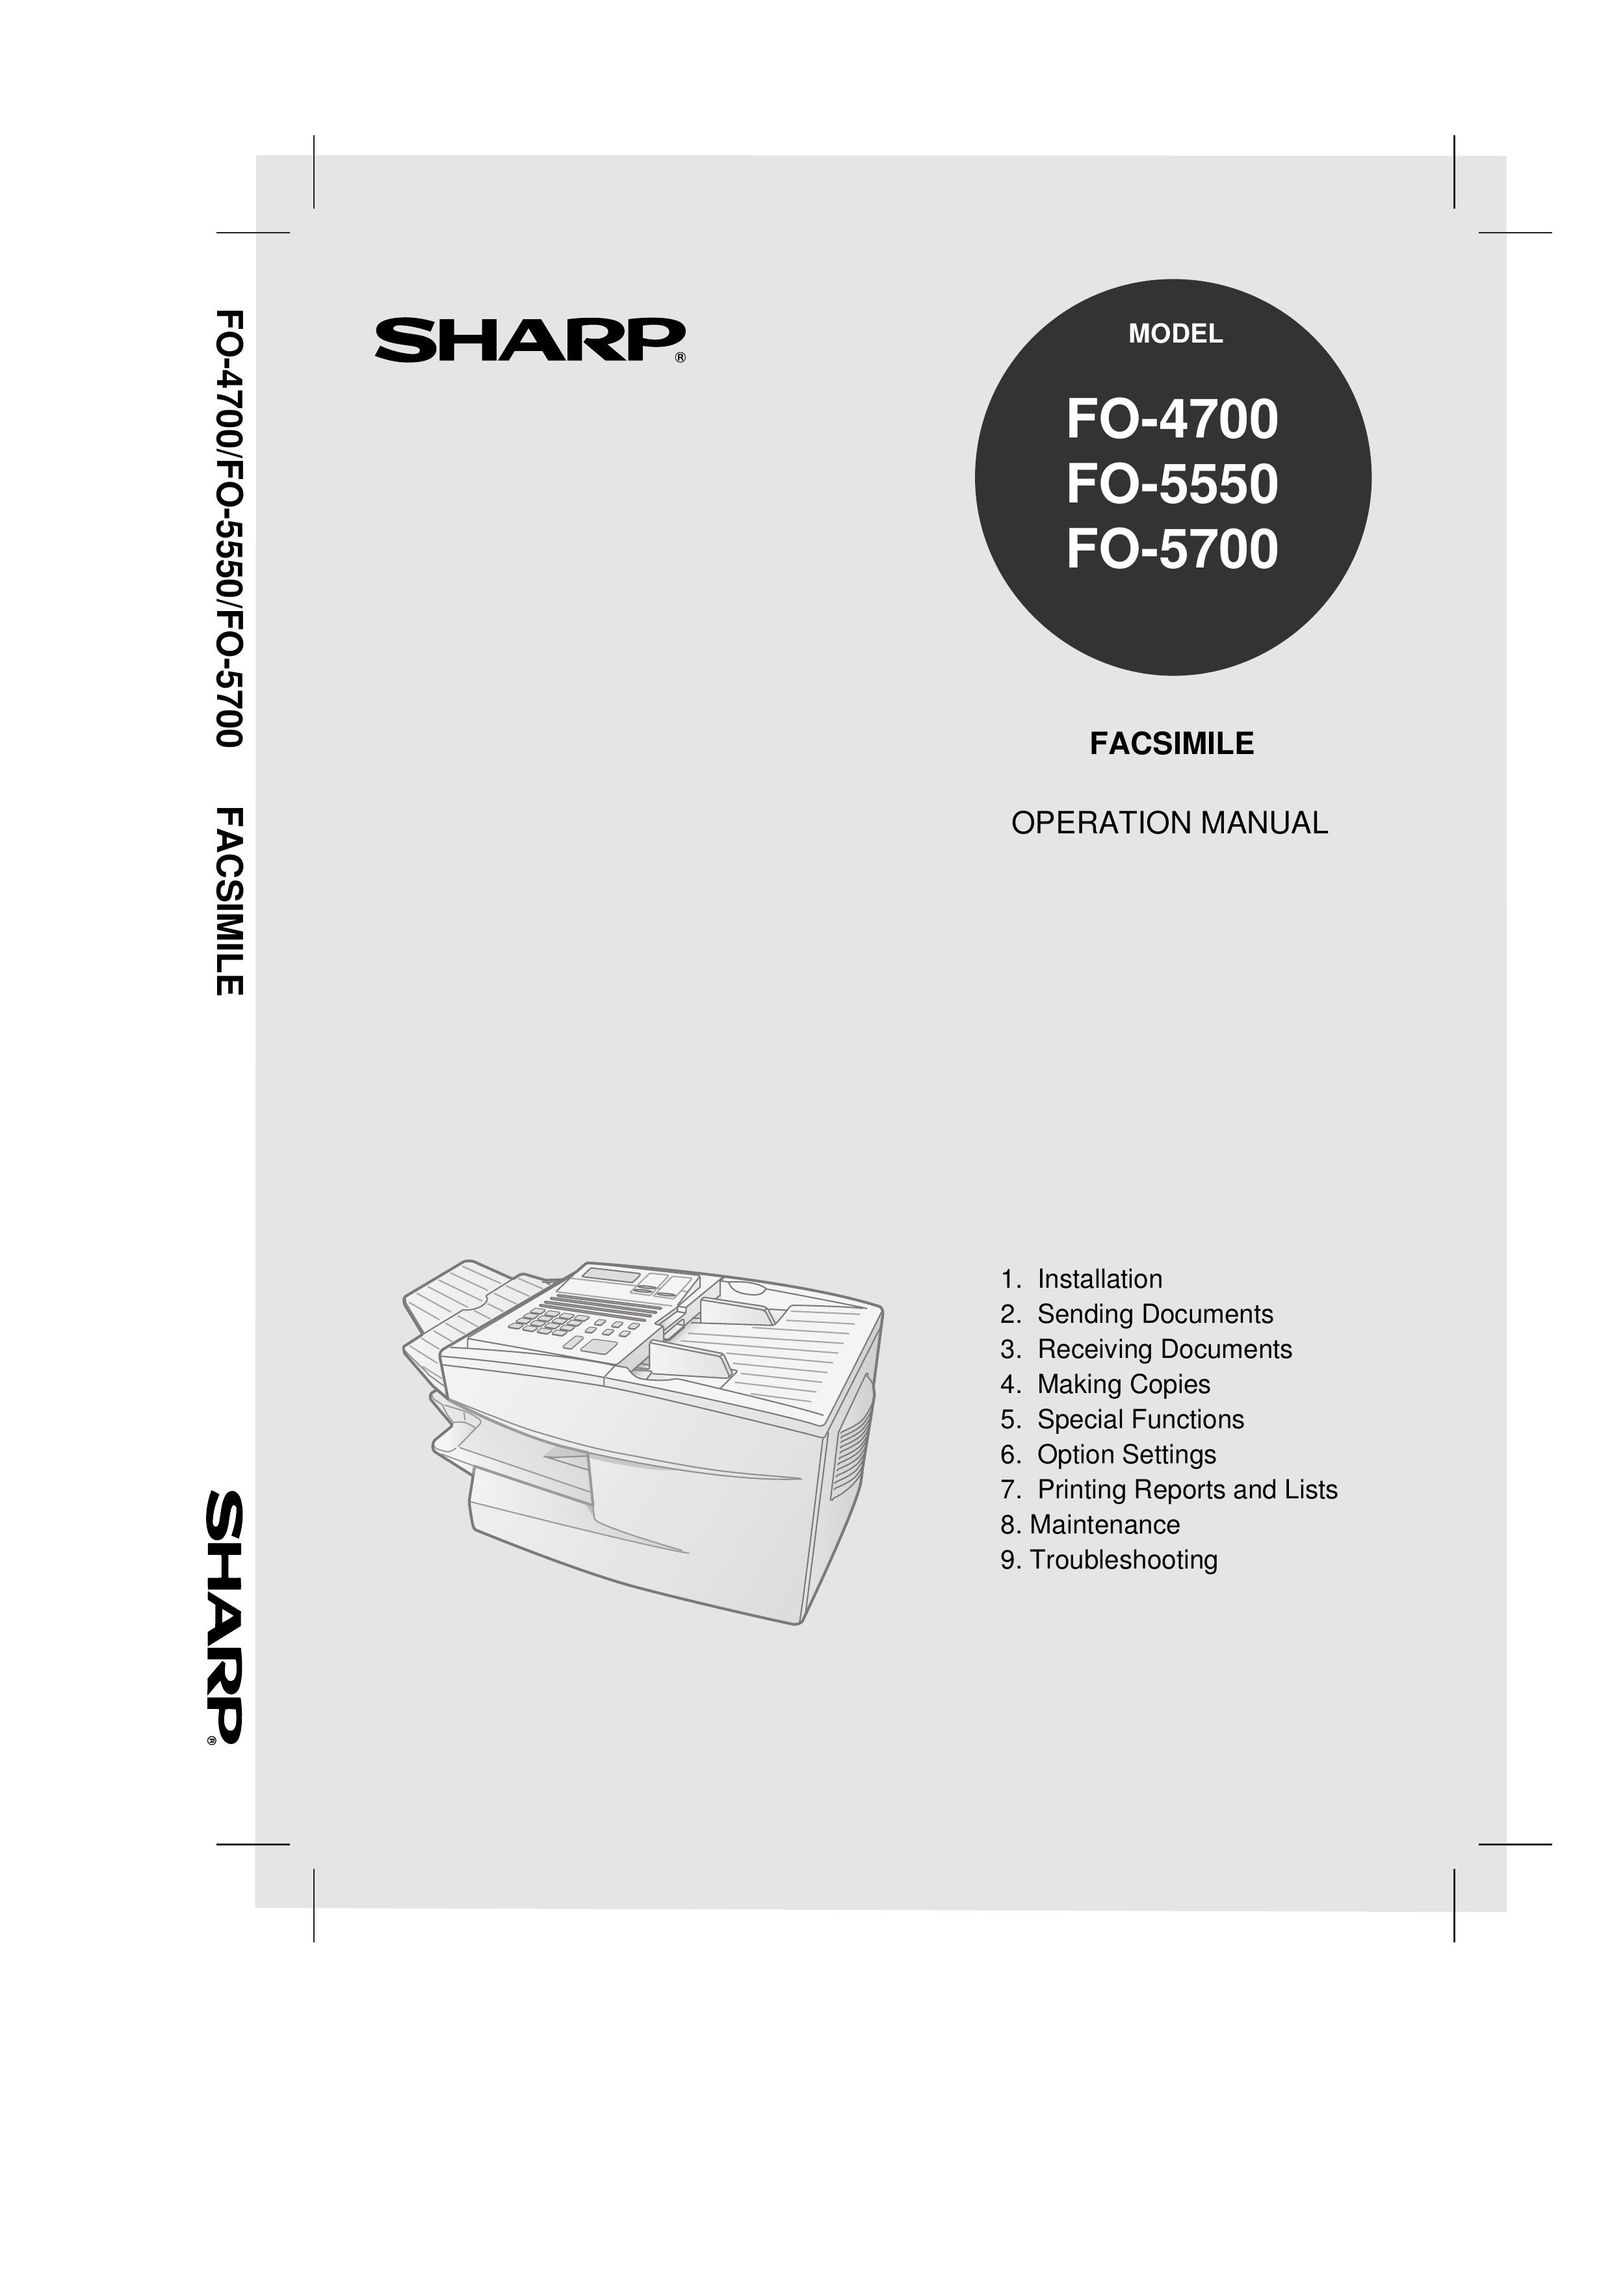 Sharp FO-5550 Fax Machine User Manual